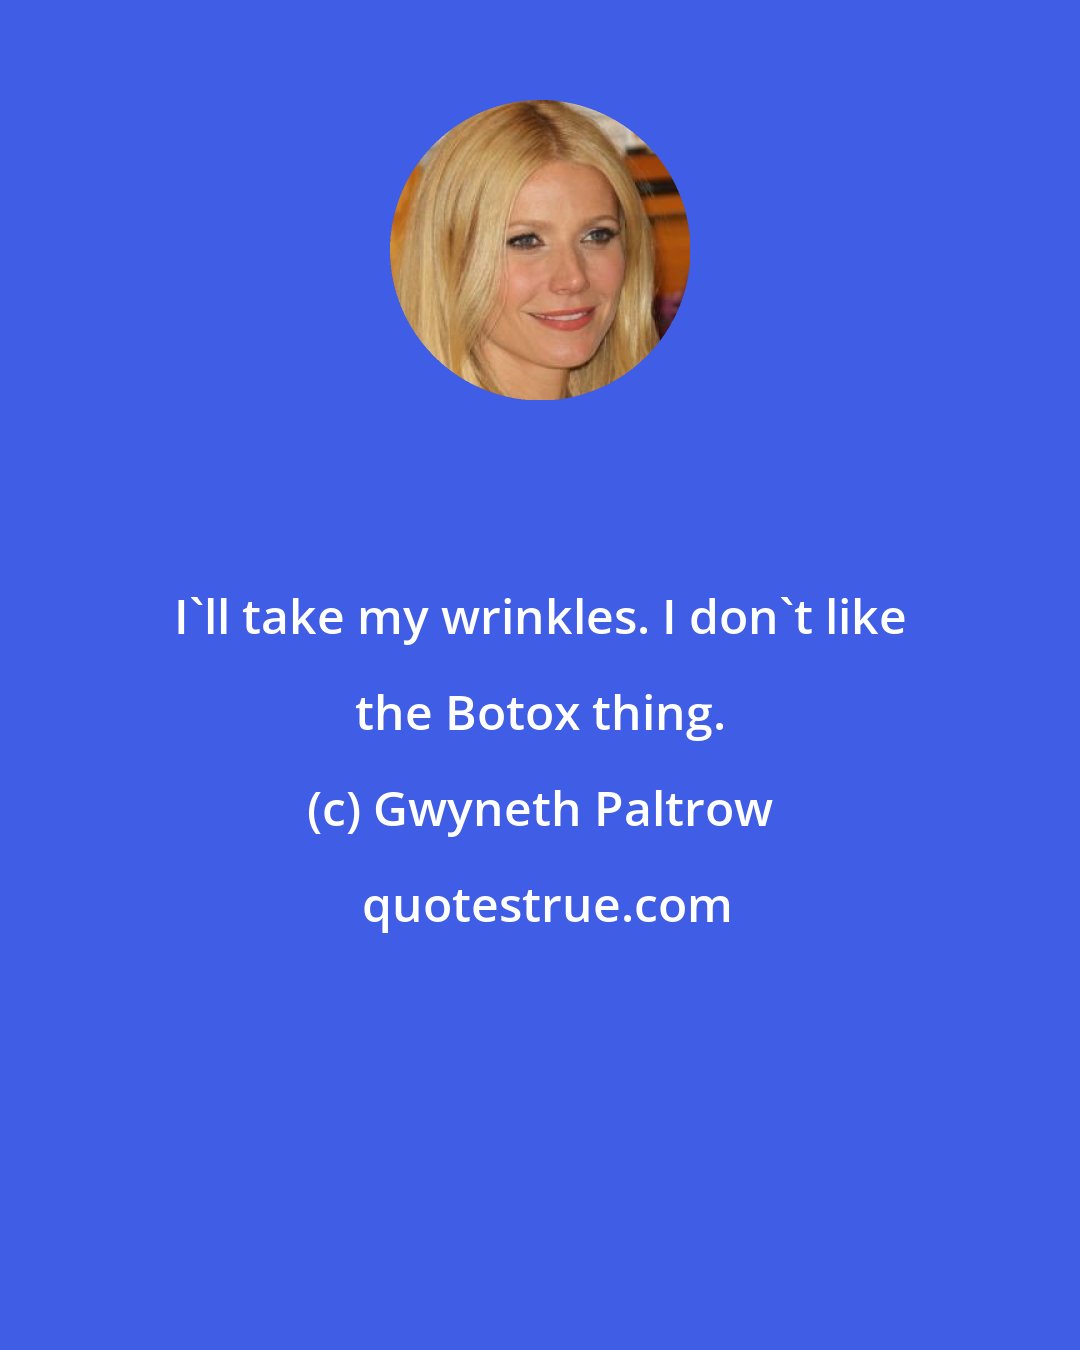 Gwyneth Paltrow: I'll take my wrinkles. I don't like the Botox thing.